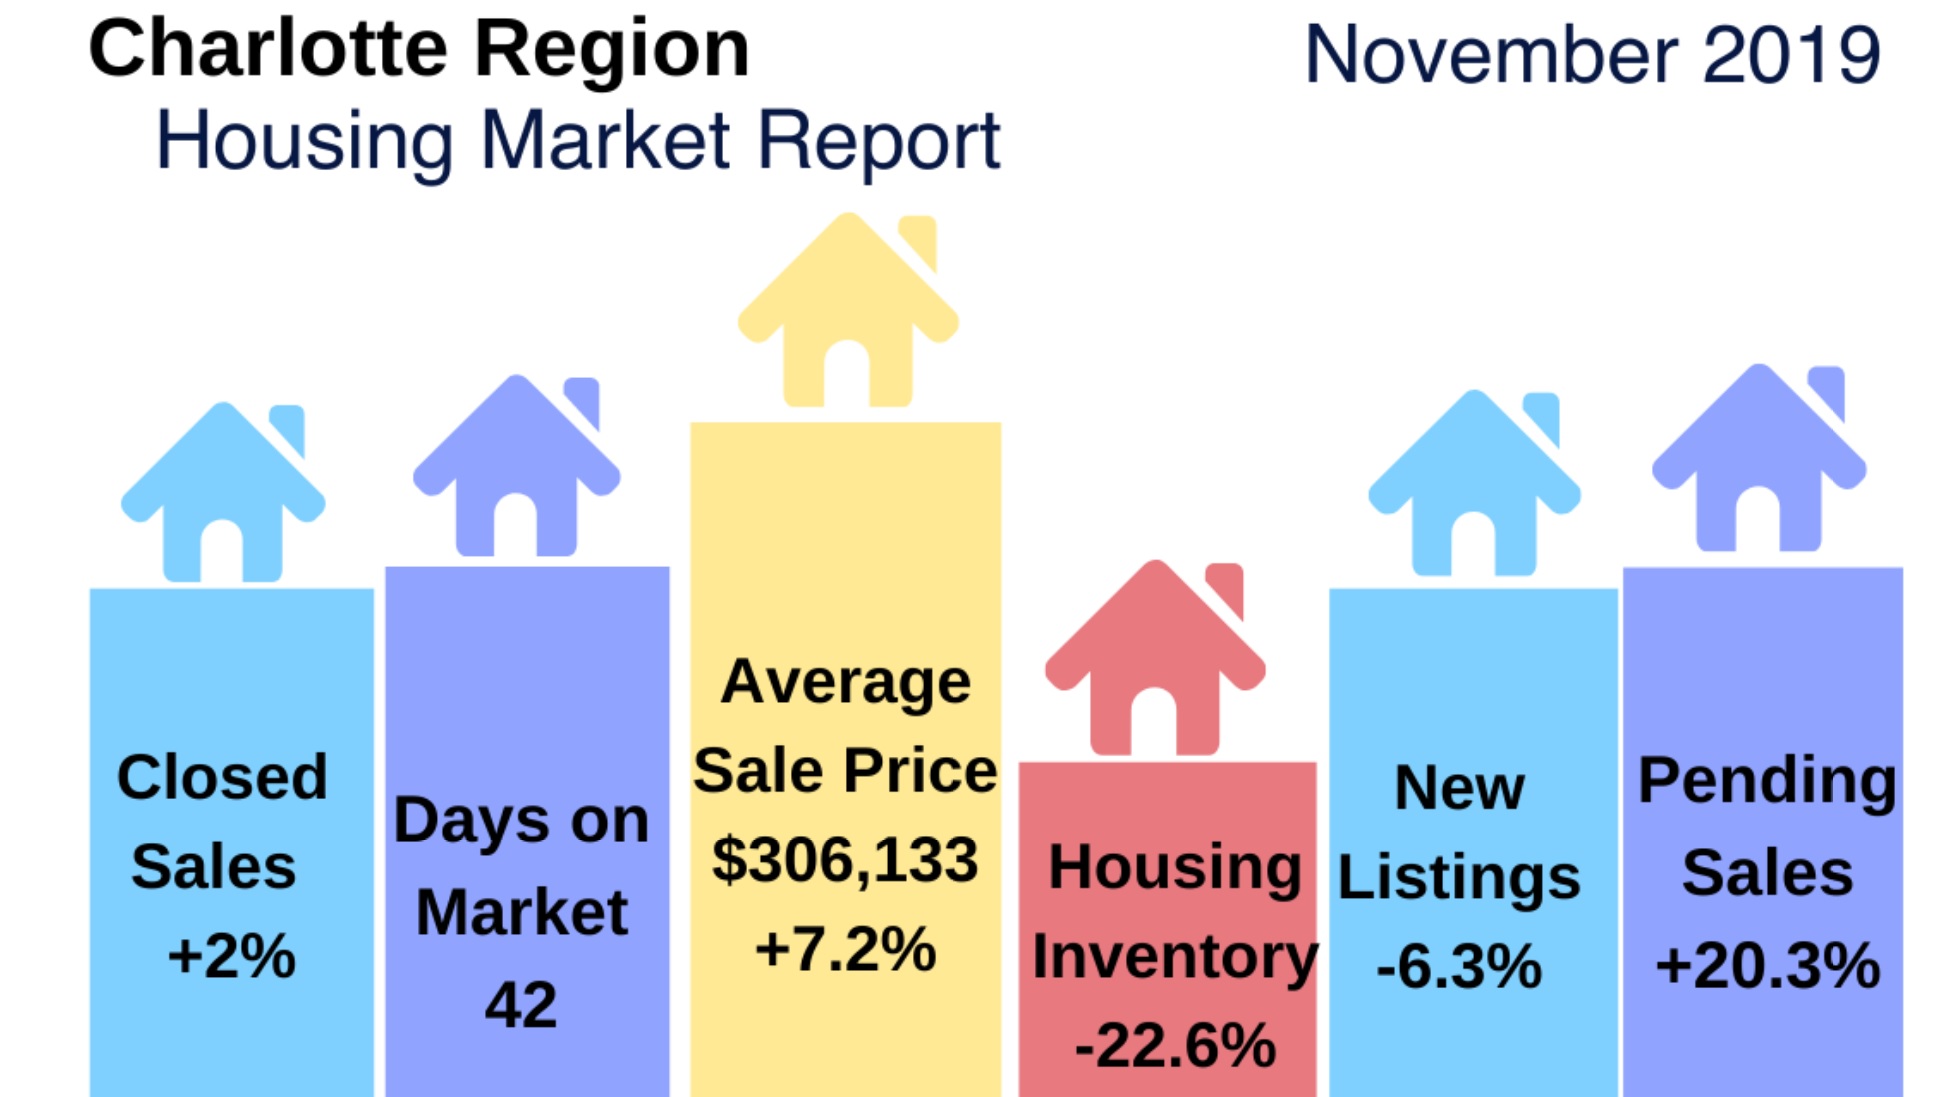 Charlotte Region Real Estate Update November 2019